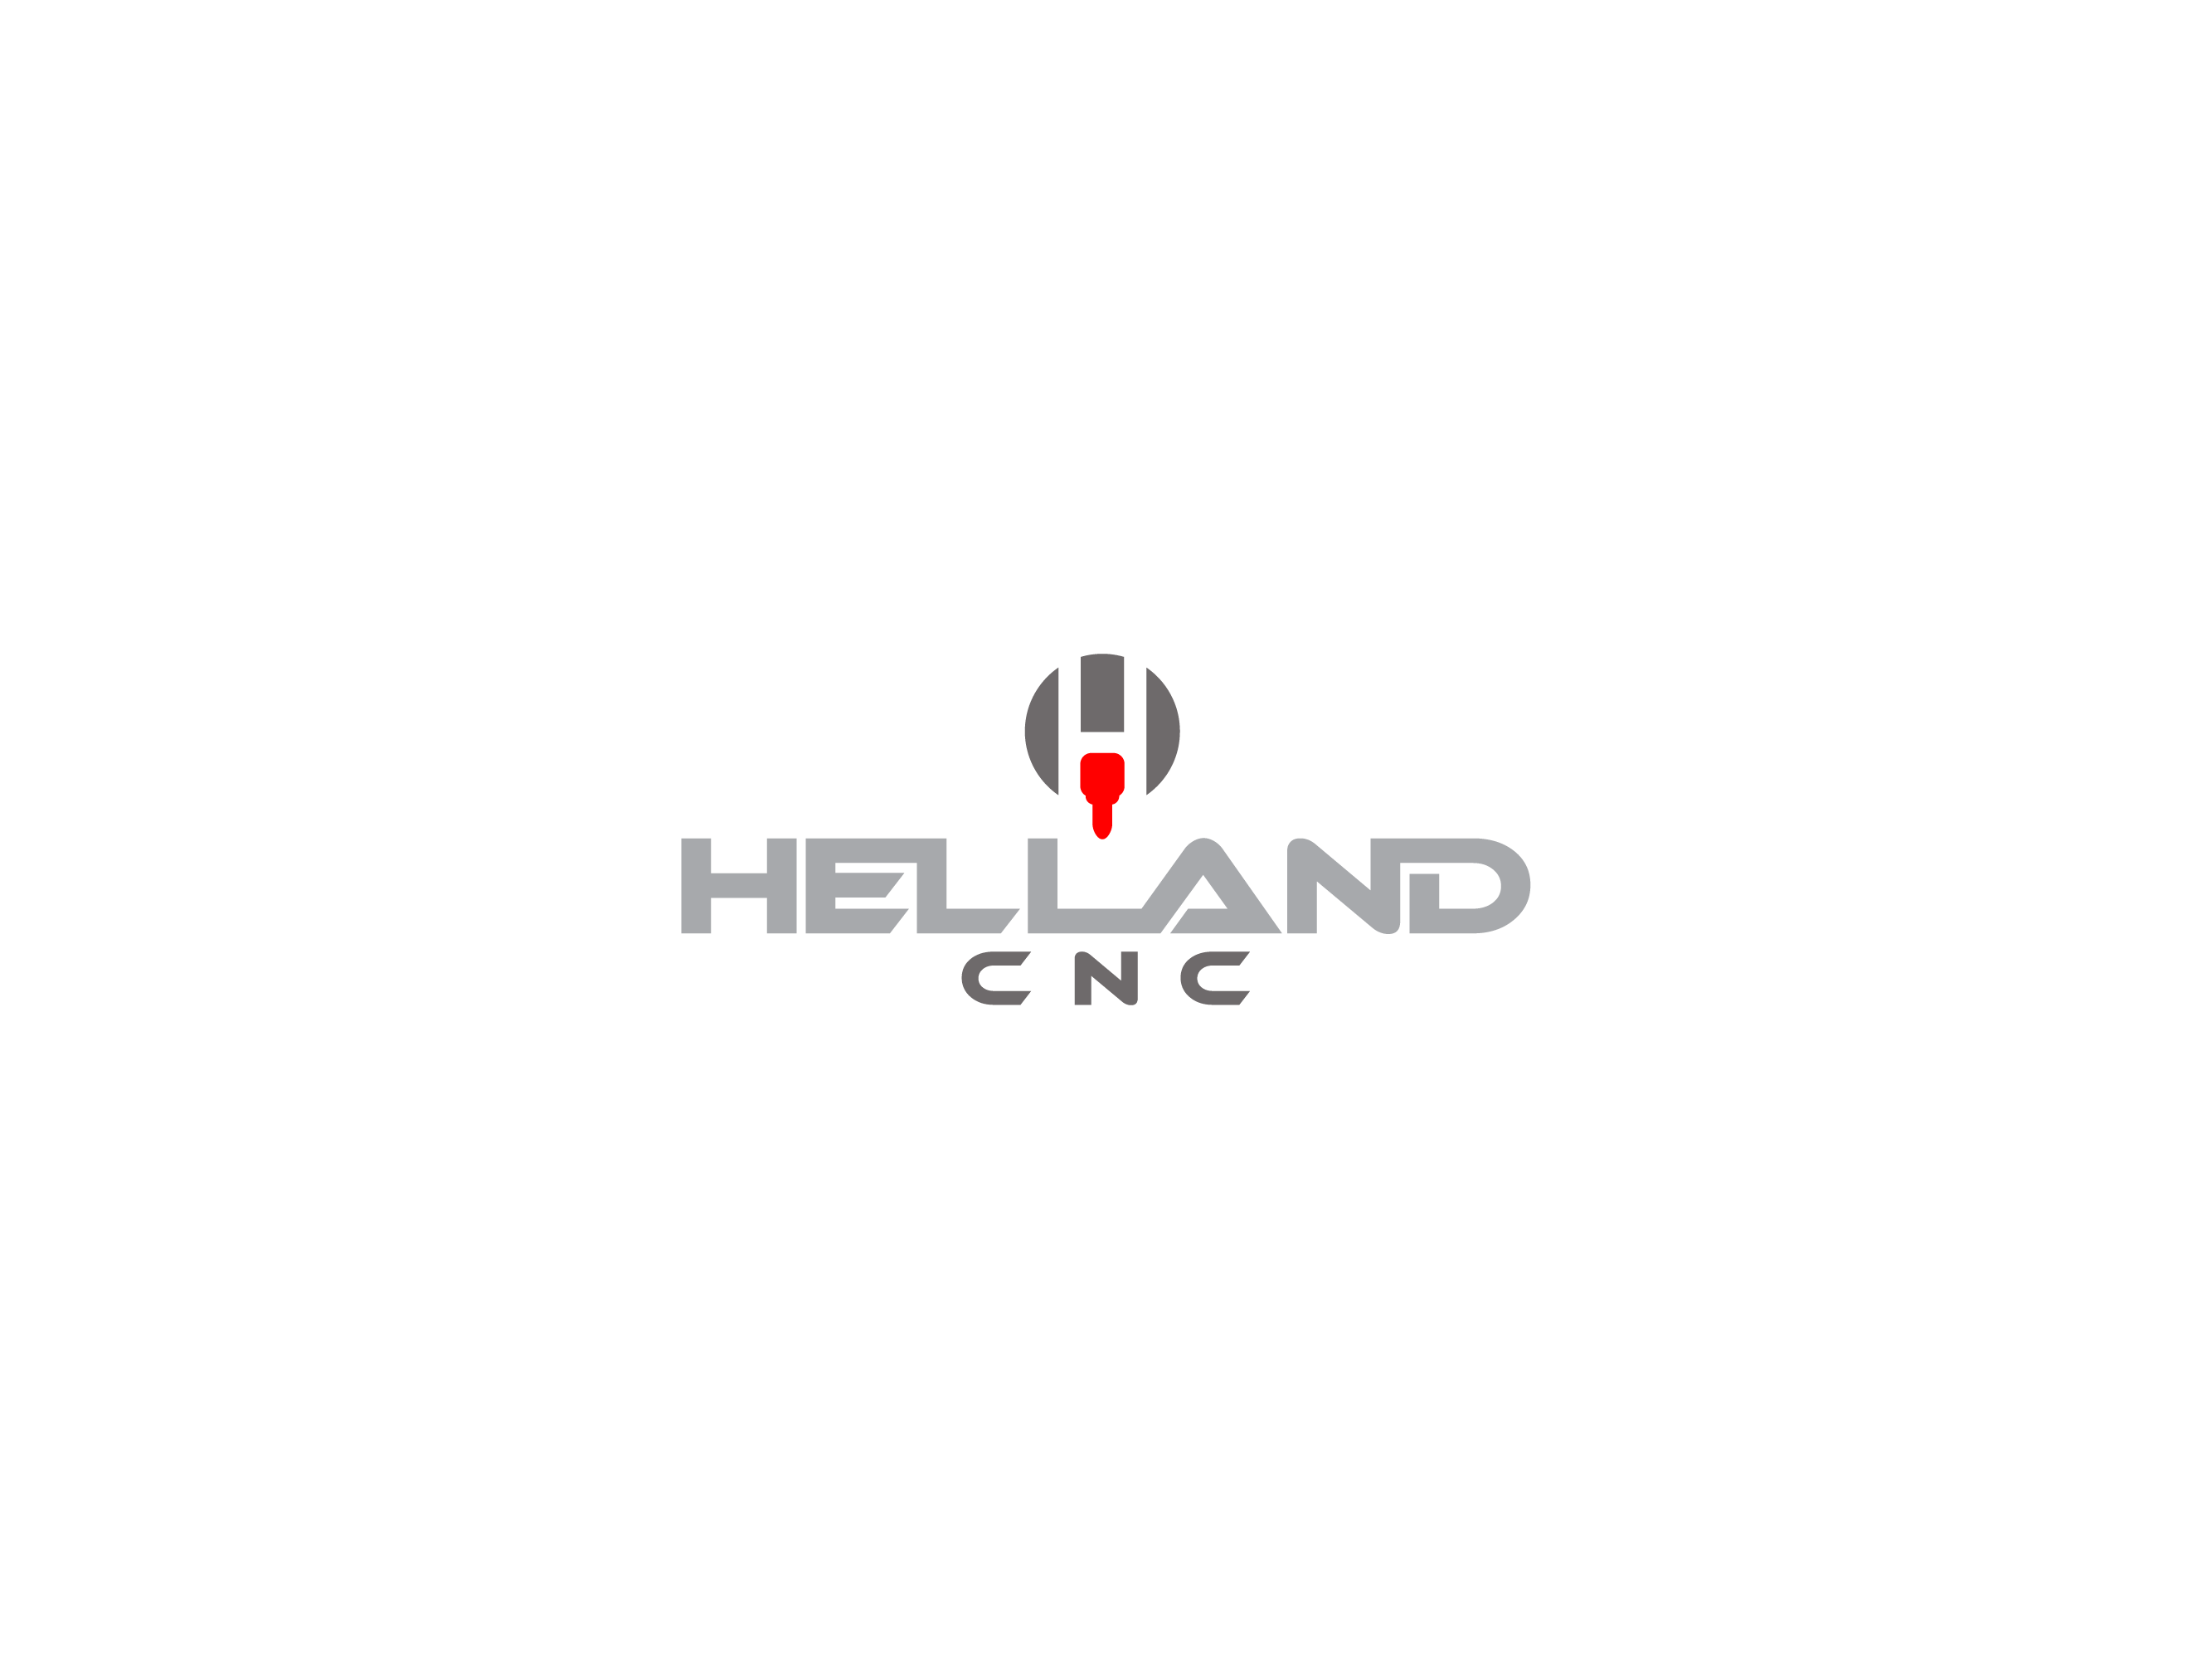 CNC Logo - Helland CNC logo, sign/engraving business in norway | Logo Design ...